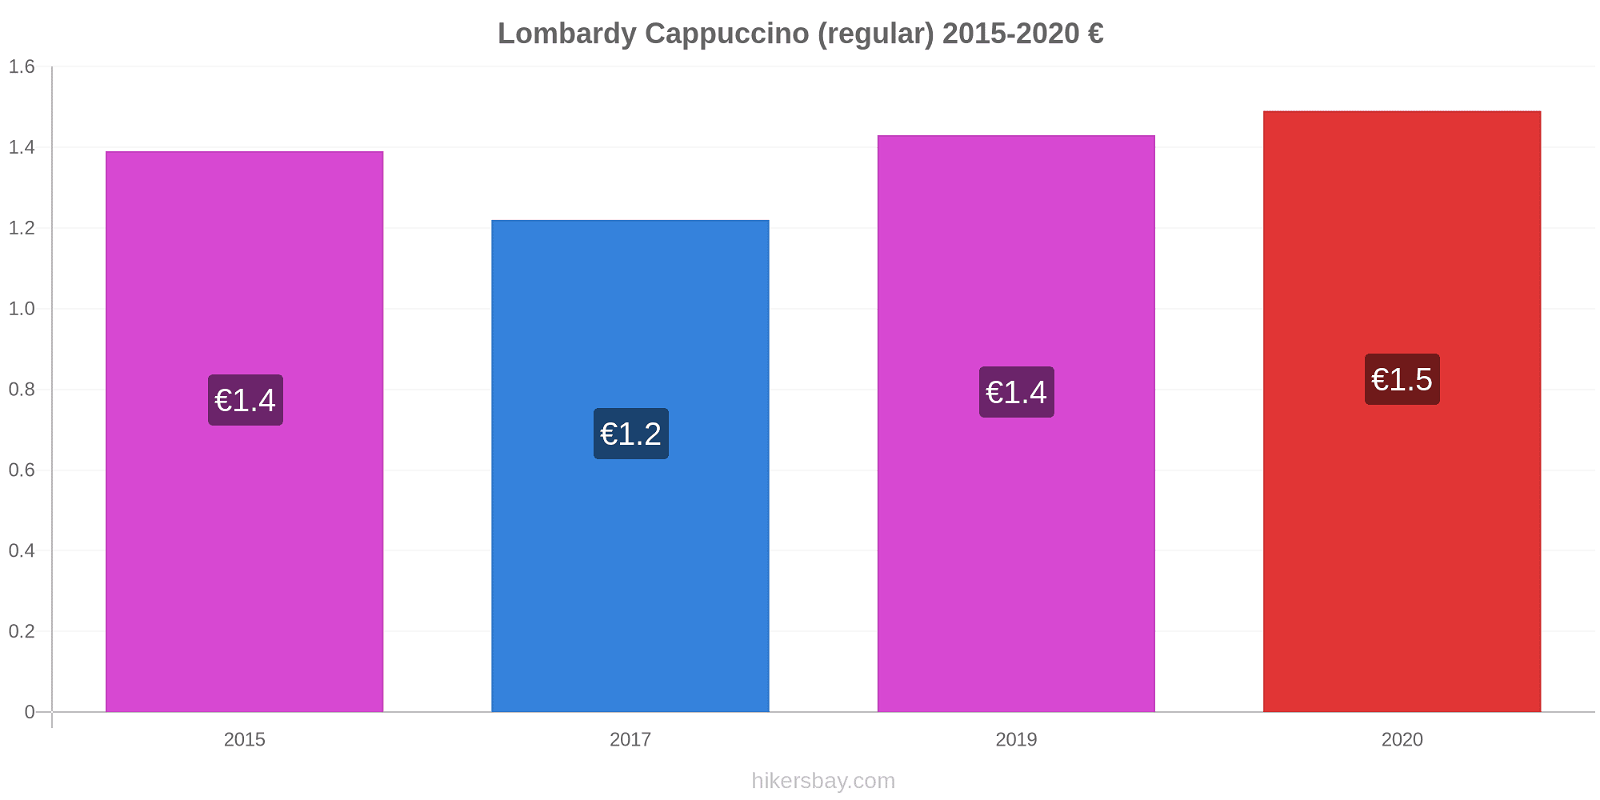 Lombardy price changes Cappuccino (regular) hikersbay.com